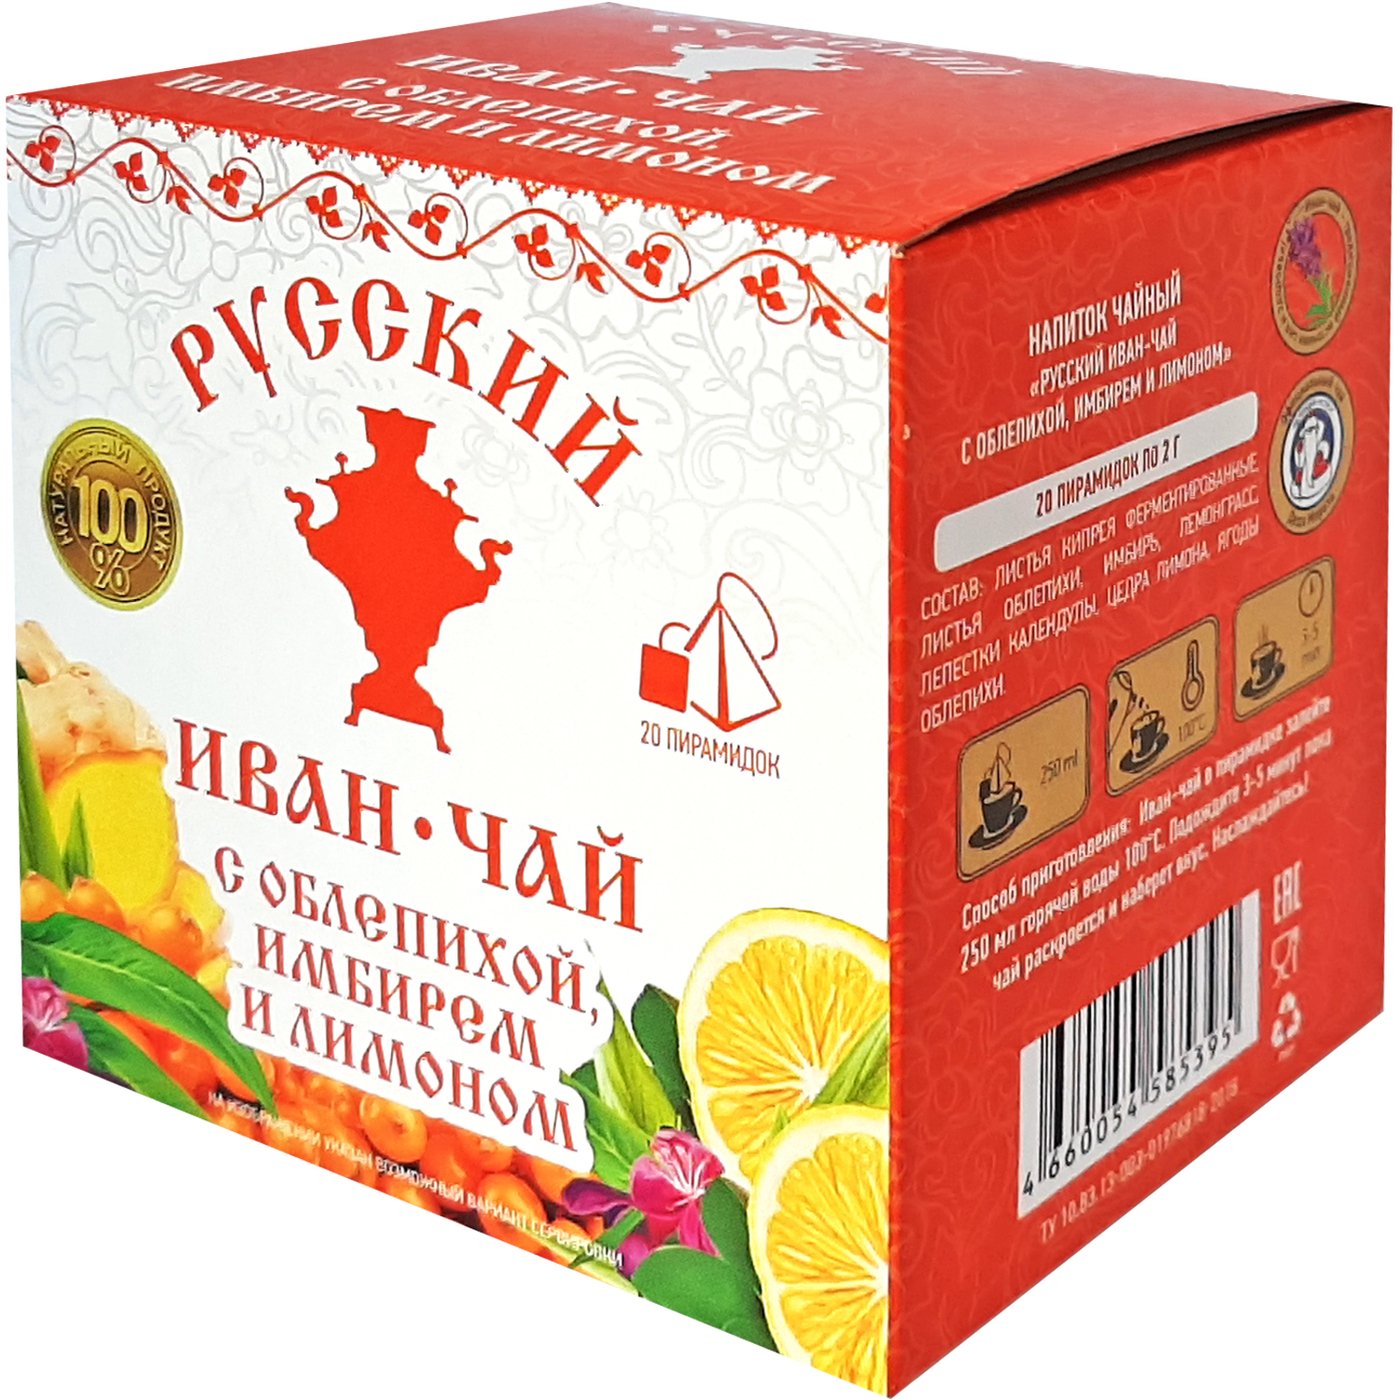 Ivan Tea Fireweed with Sea Buckthorn, Ginger & Lemon, Russian Ivan Tea, 20 pyramids